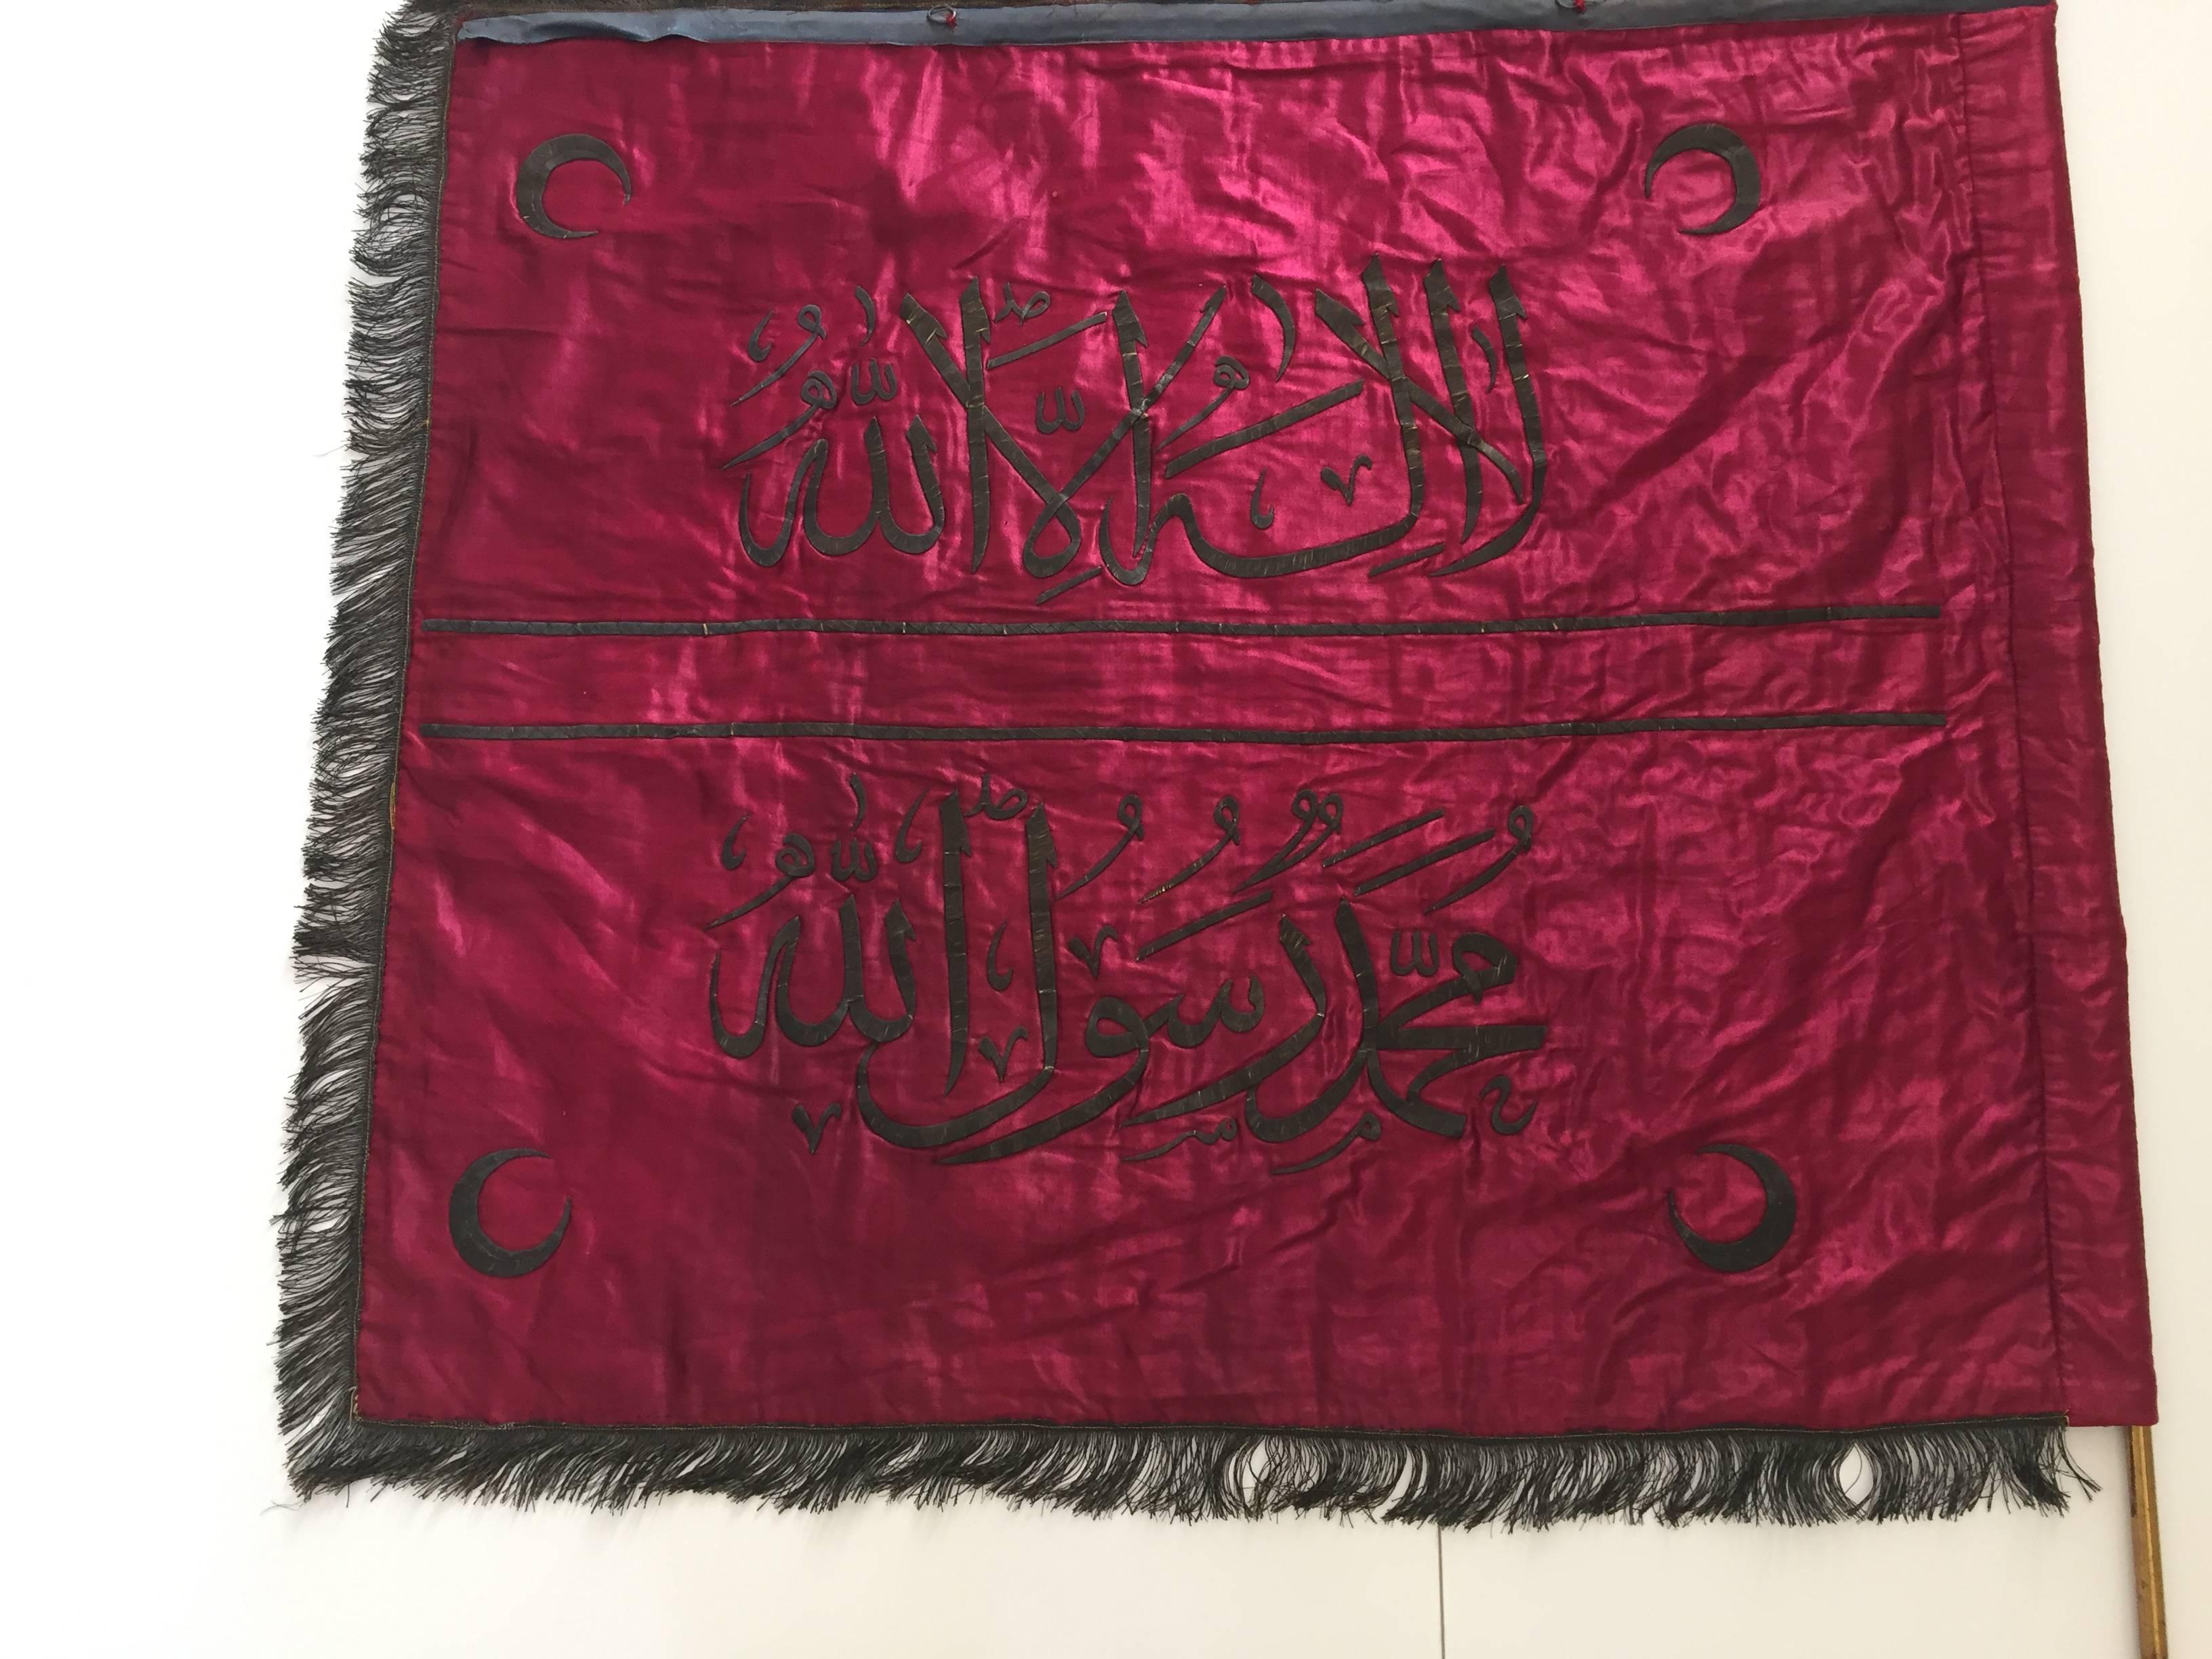 19th century Ottoman silk and metal thread embroidered banner with the Tugrah of Sultan Abdulhamid II 
(1876-1909).
Osmanli arma-tugra Sancagi y. 1887 Hicri 1303 II. Abdülhamid Han Sultan döneminde.
Ottoman metallic embroidered red silk banner in